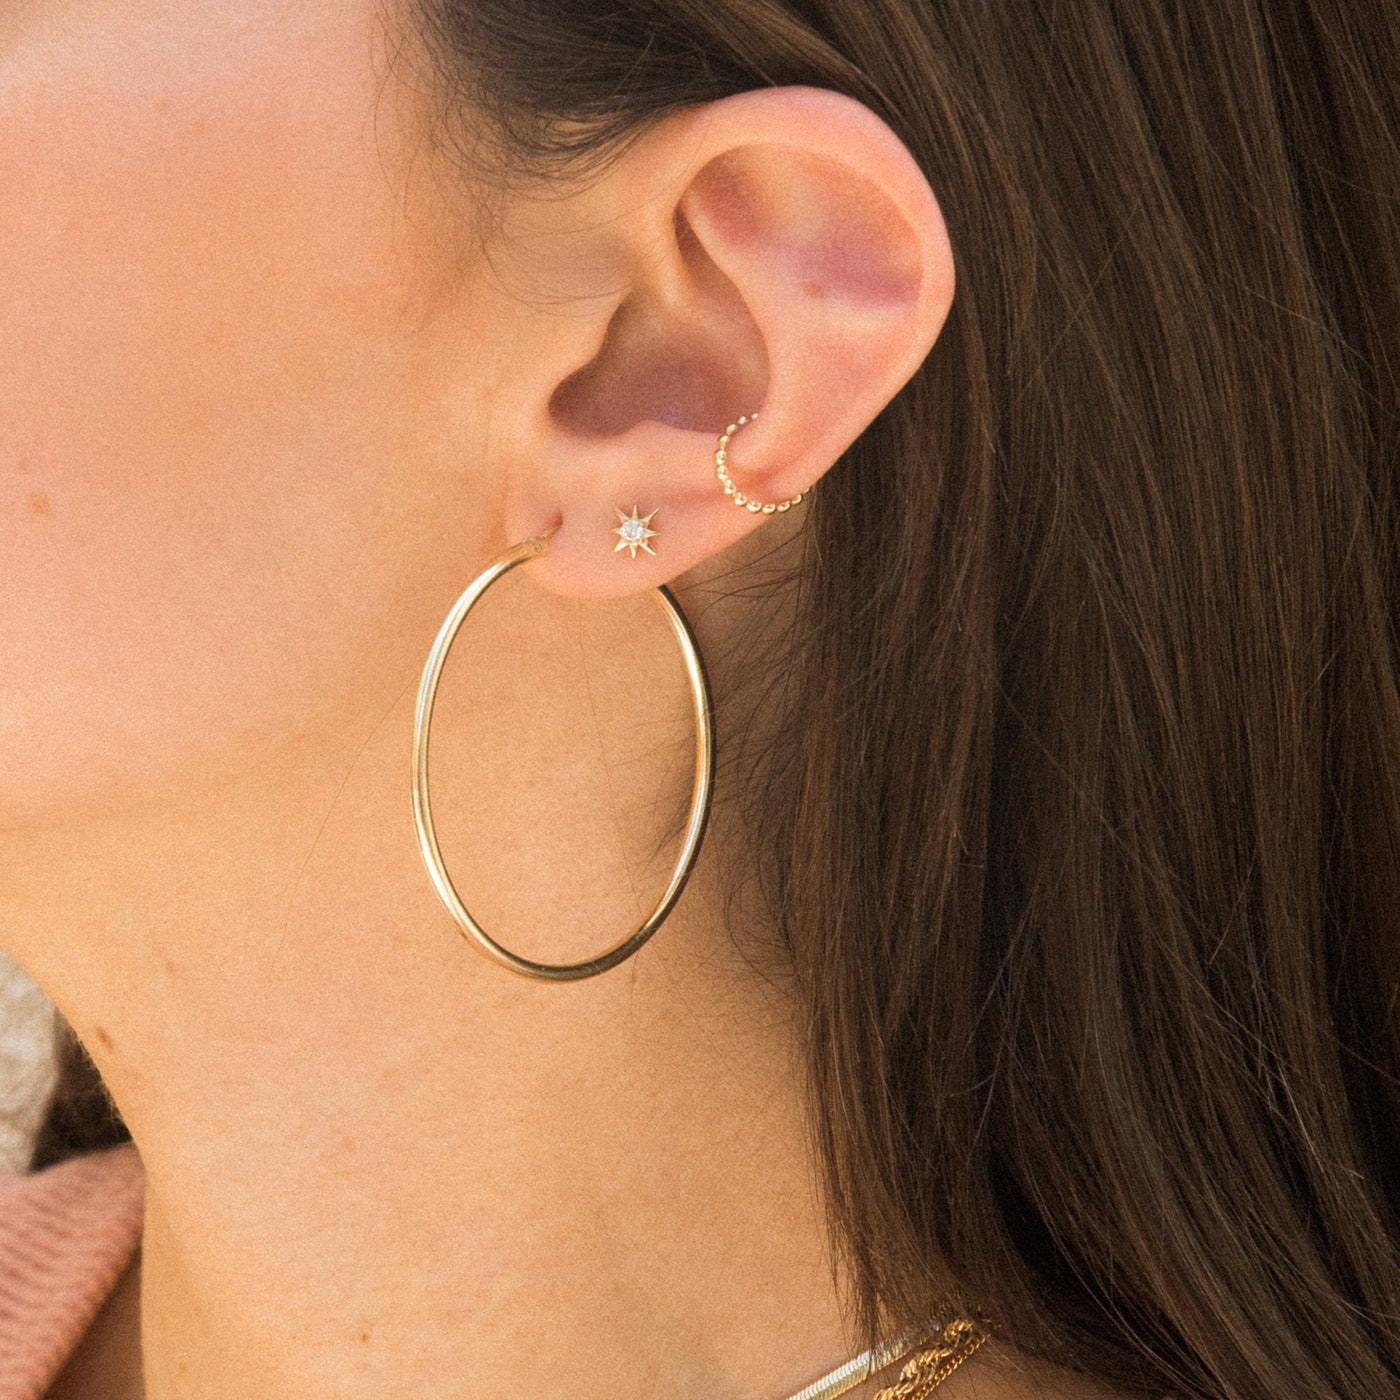 Starburst Stud Earrings by Simple & Dainty Jewelry